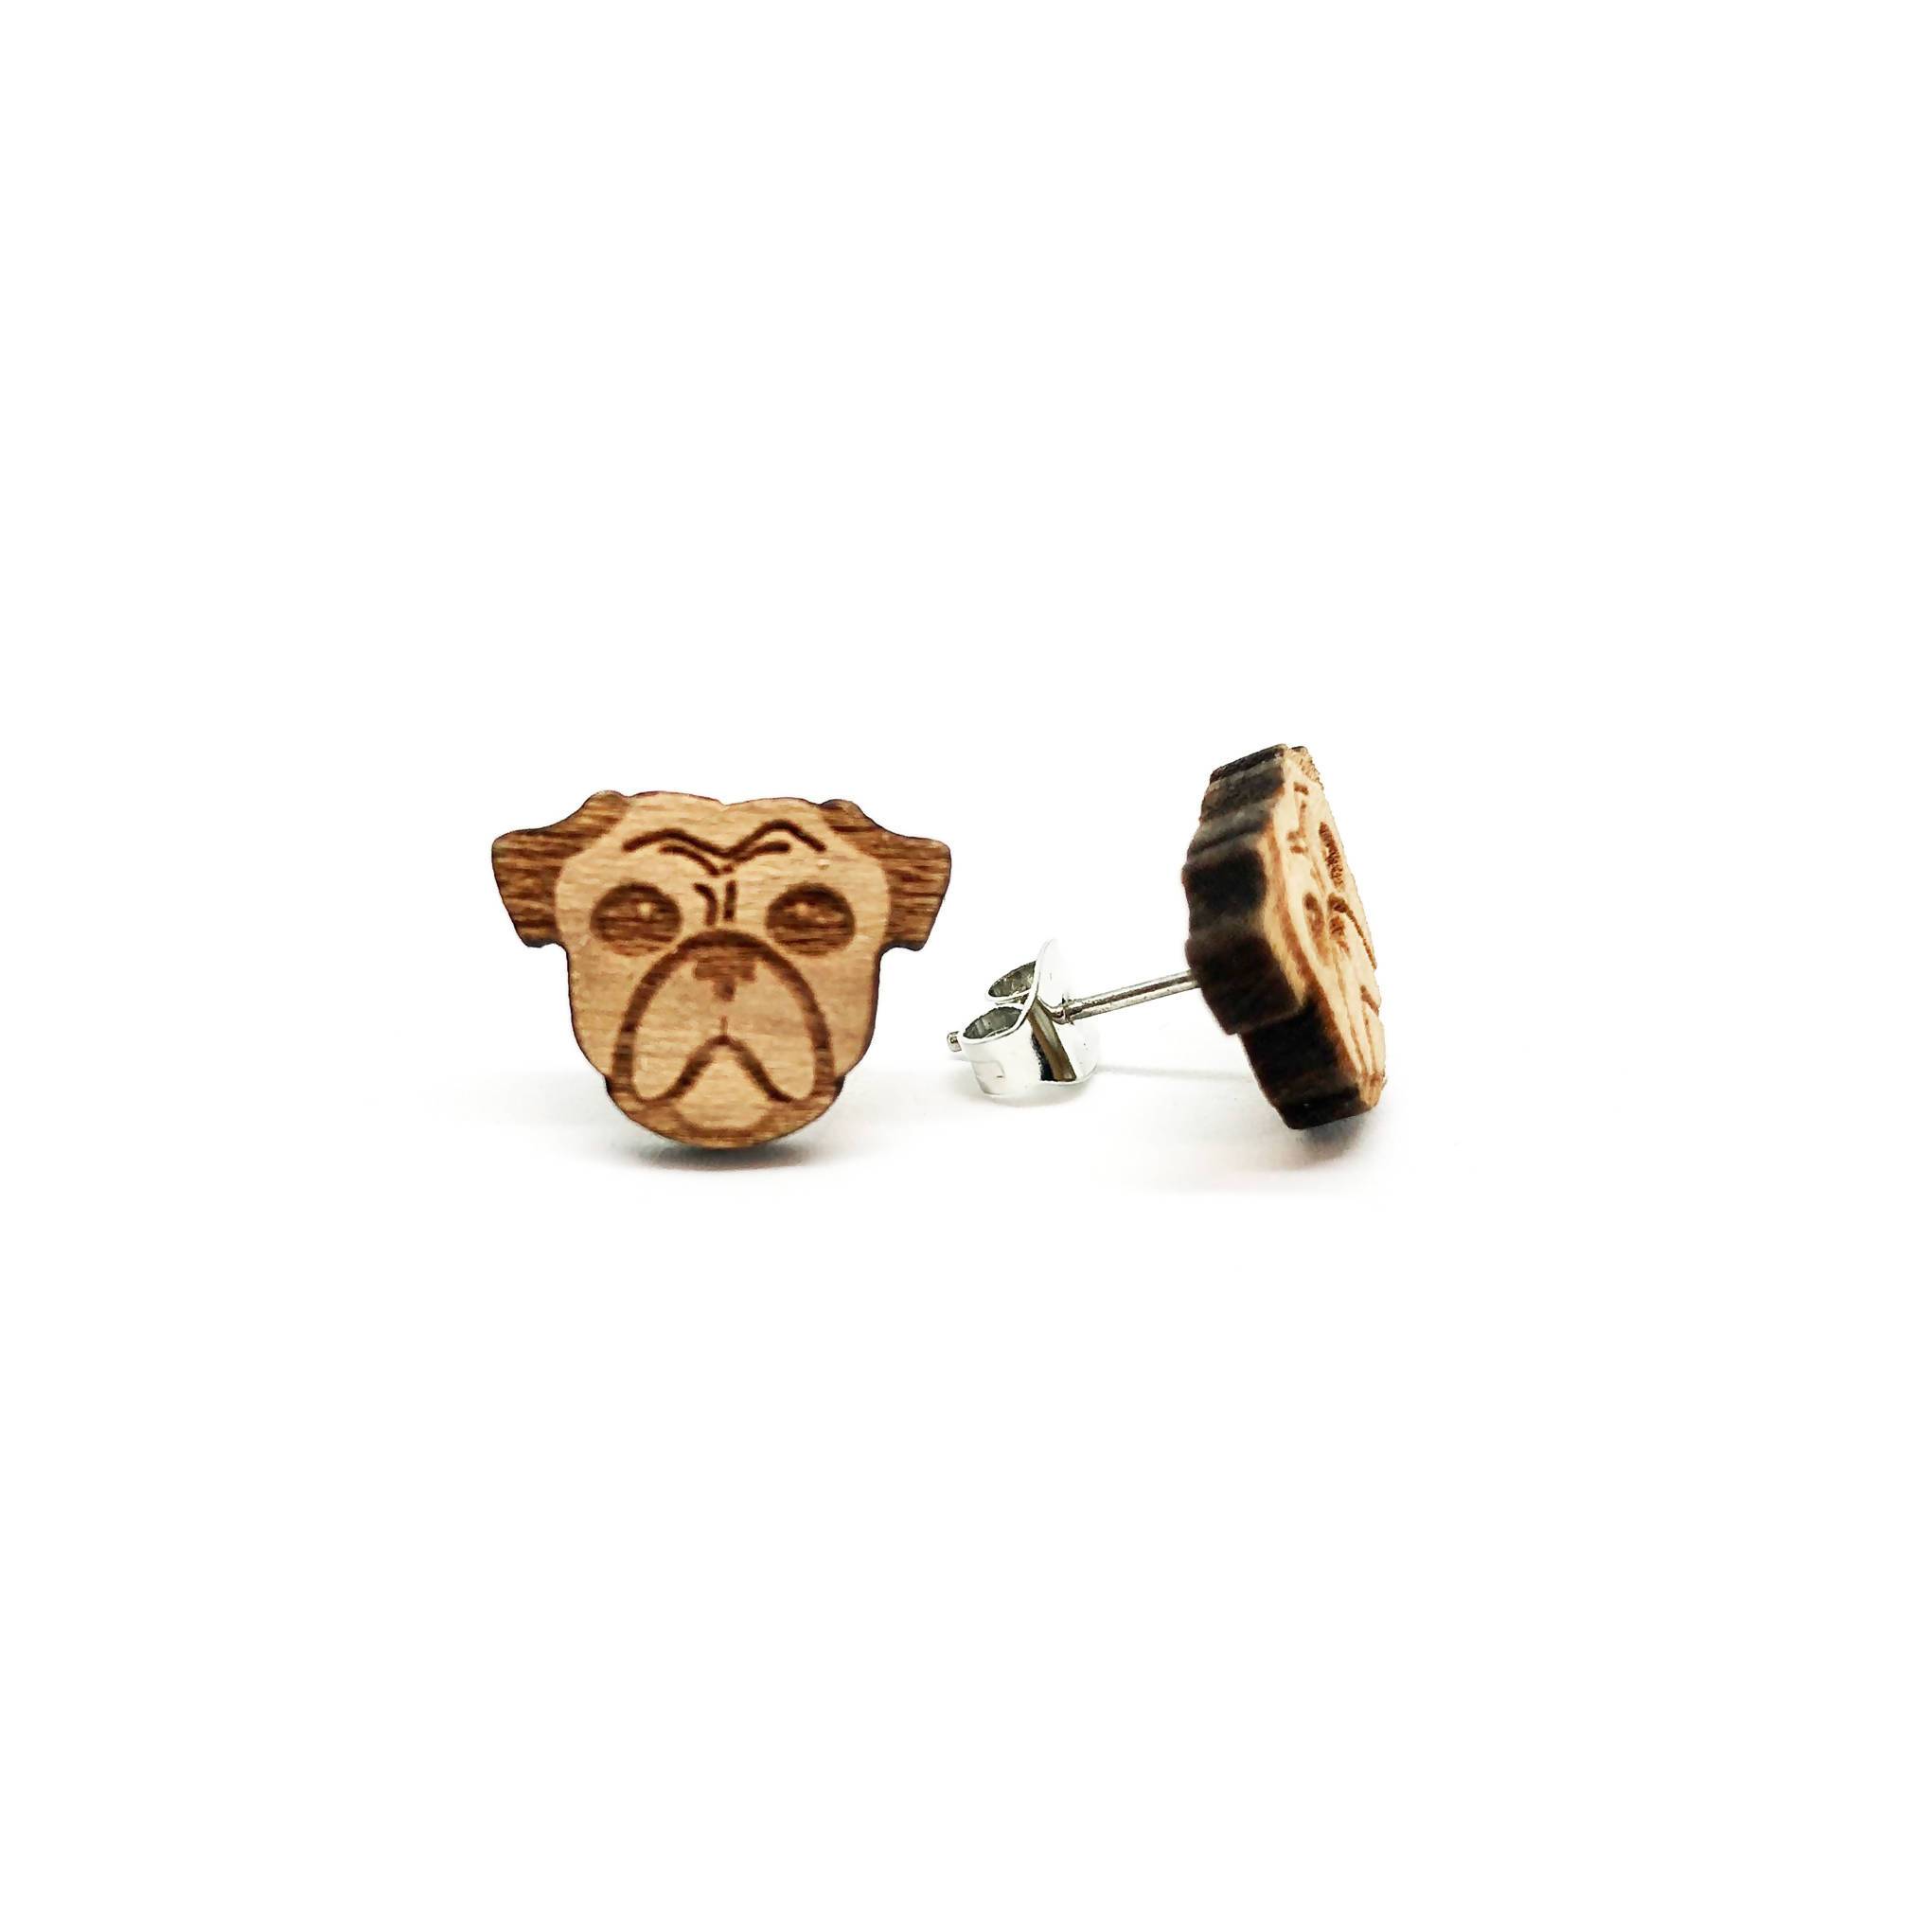 Lazy Bulldog Laser Cut Wood Earrings - Earring Studs - Paperdaise Accessories - Naiise